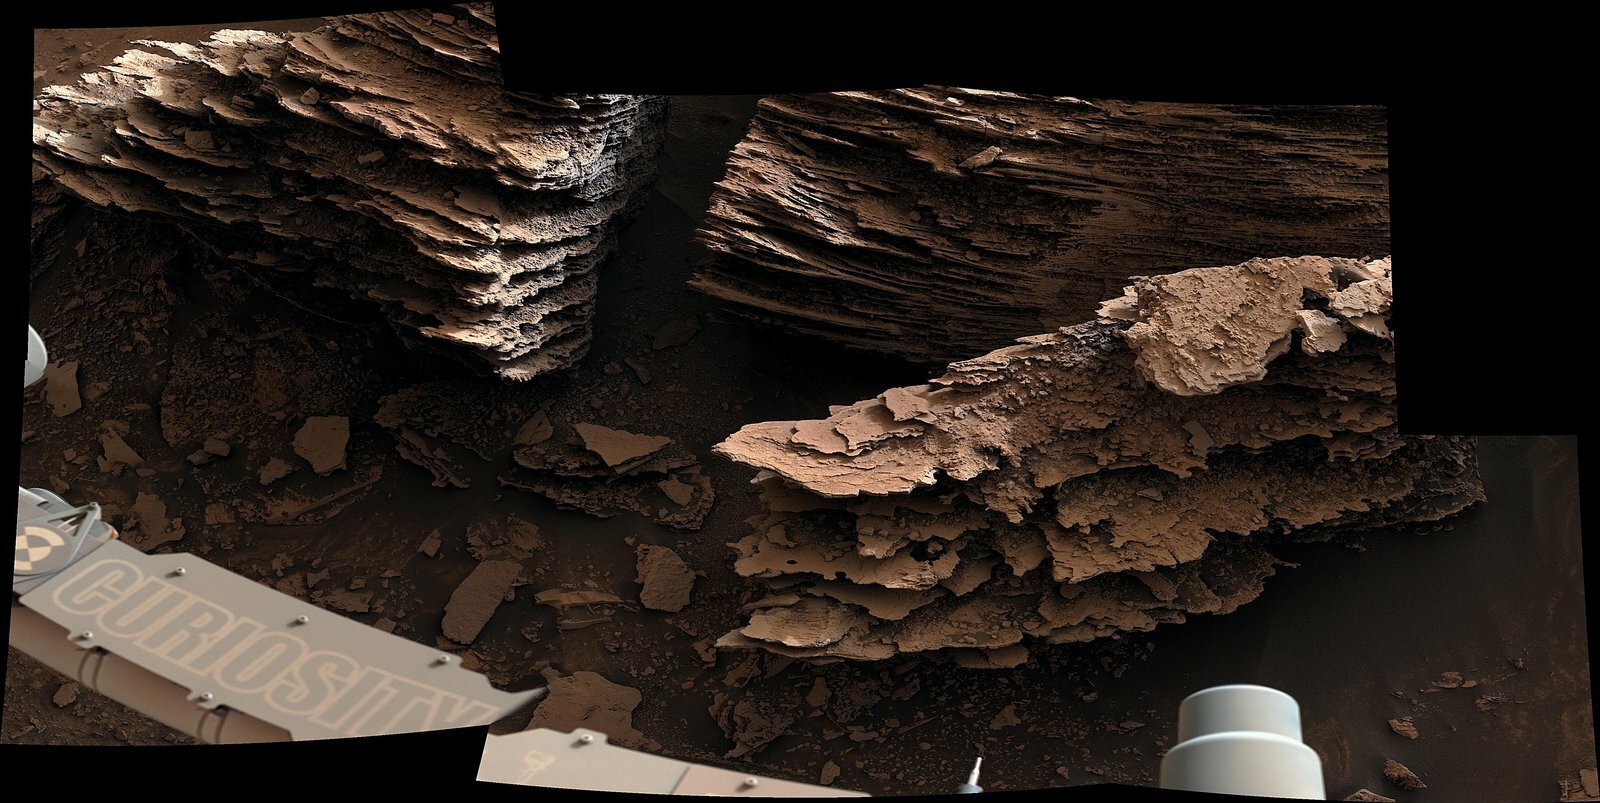 a rock on Mars